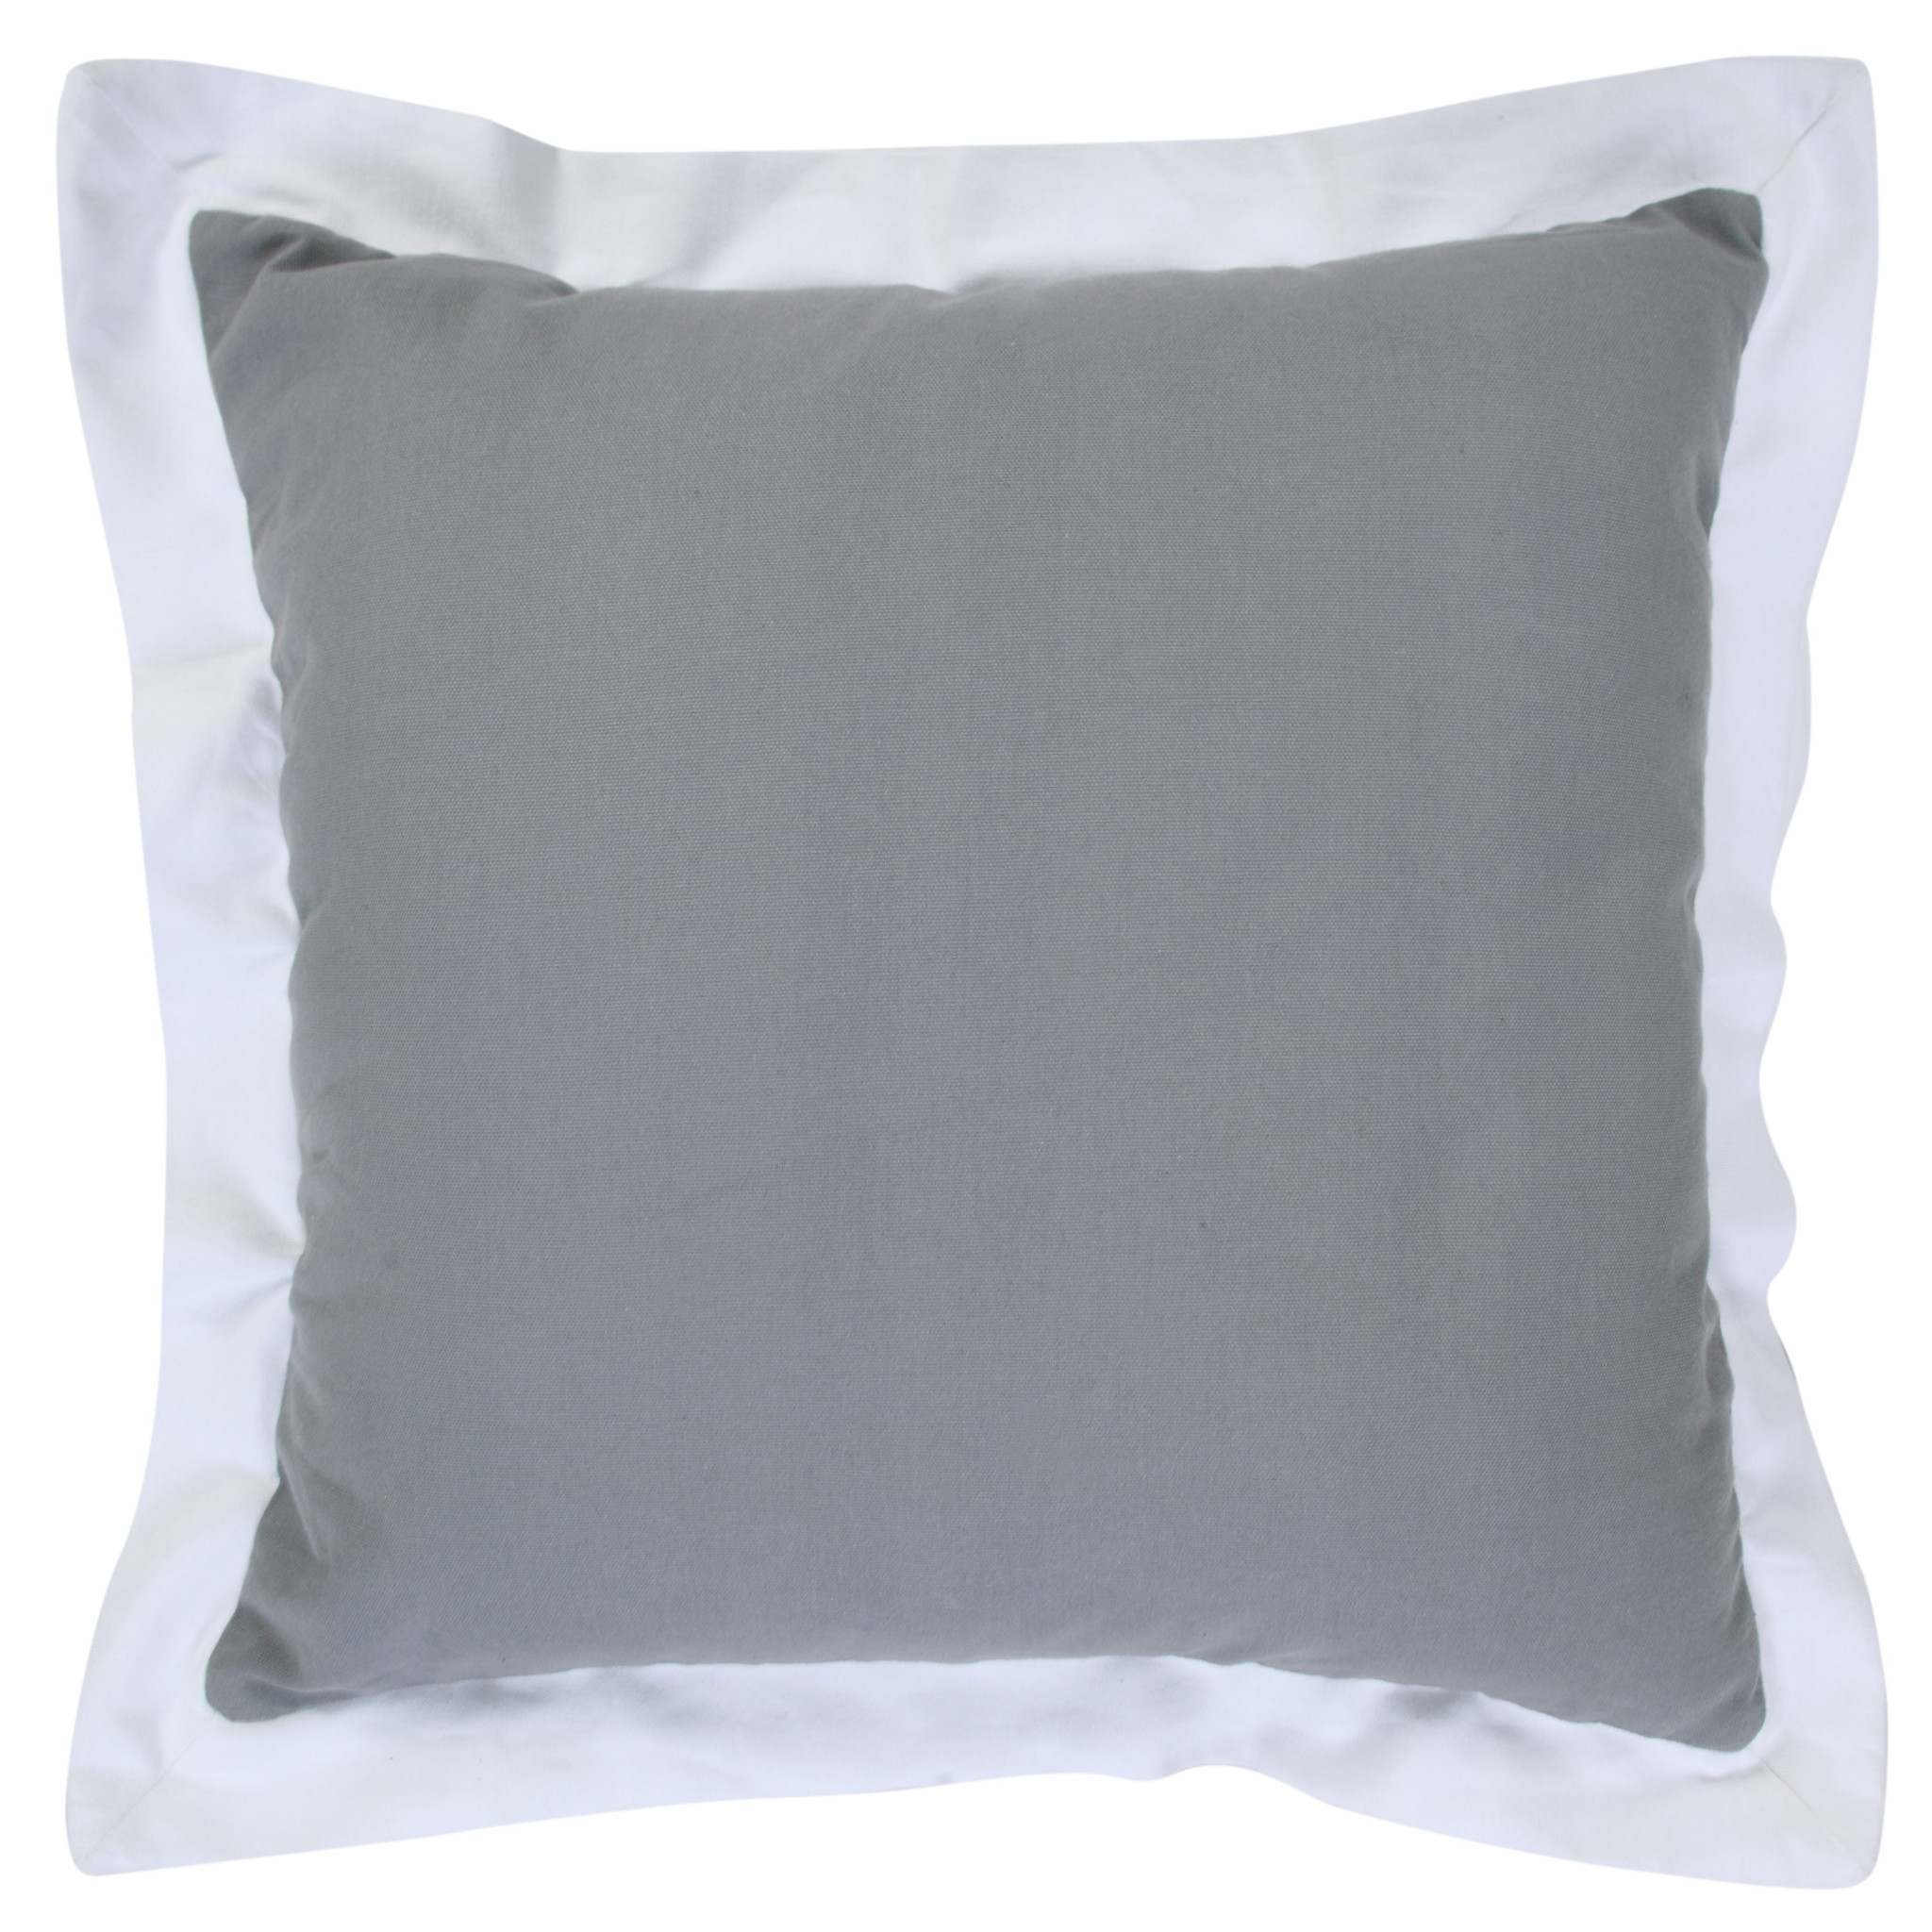 20" X 20" Gray And White 100% Cotton Geometric Zippered Pillow-516833-1